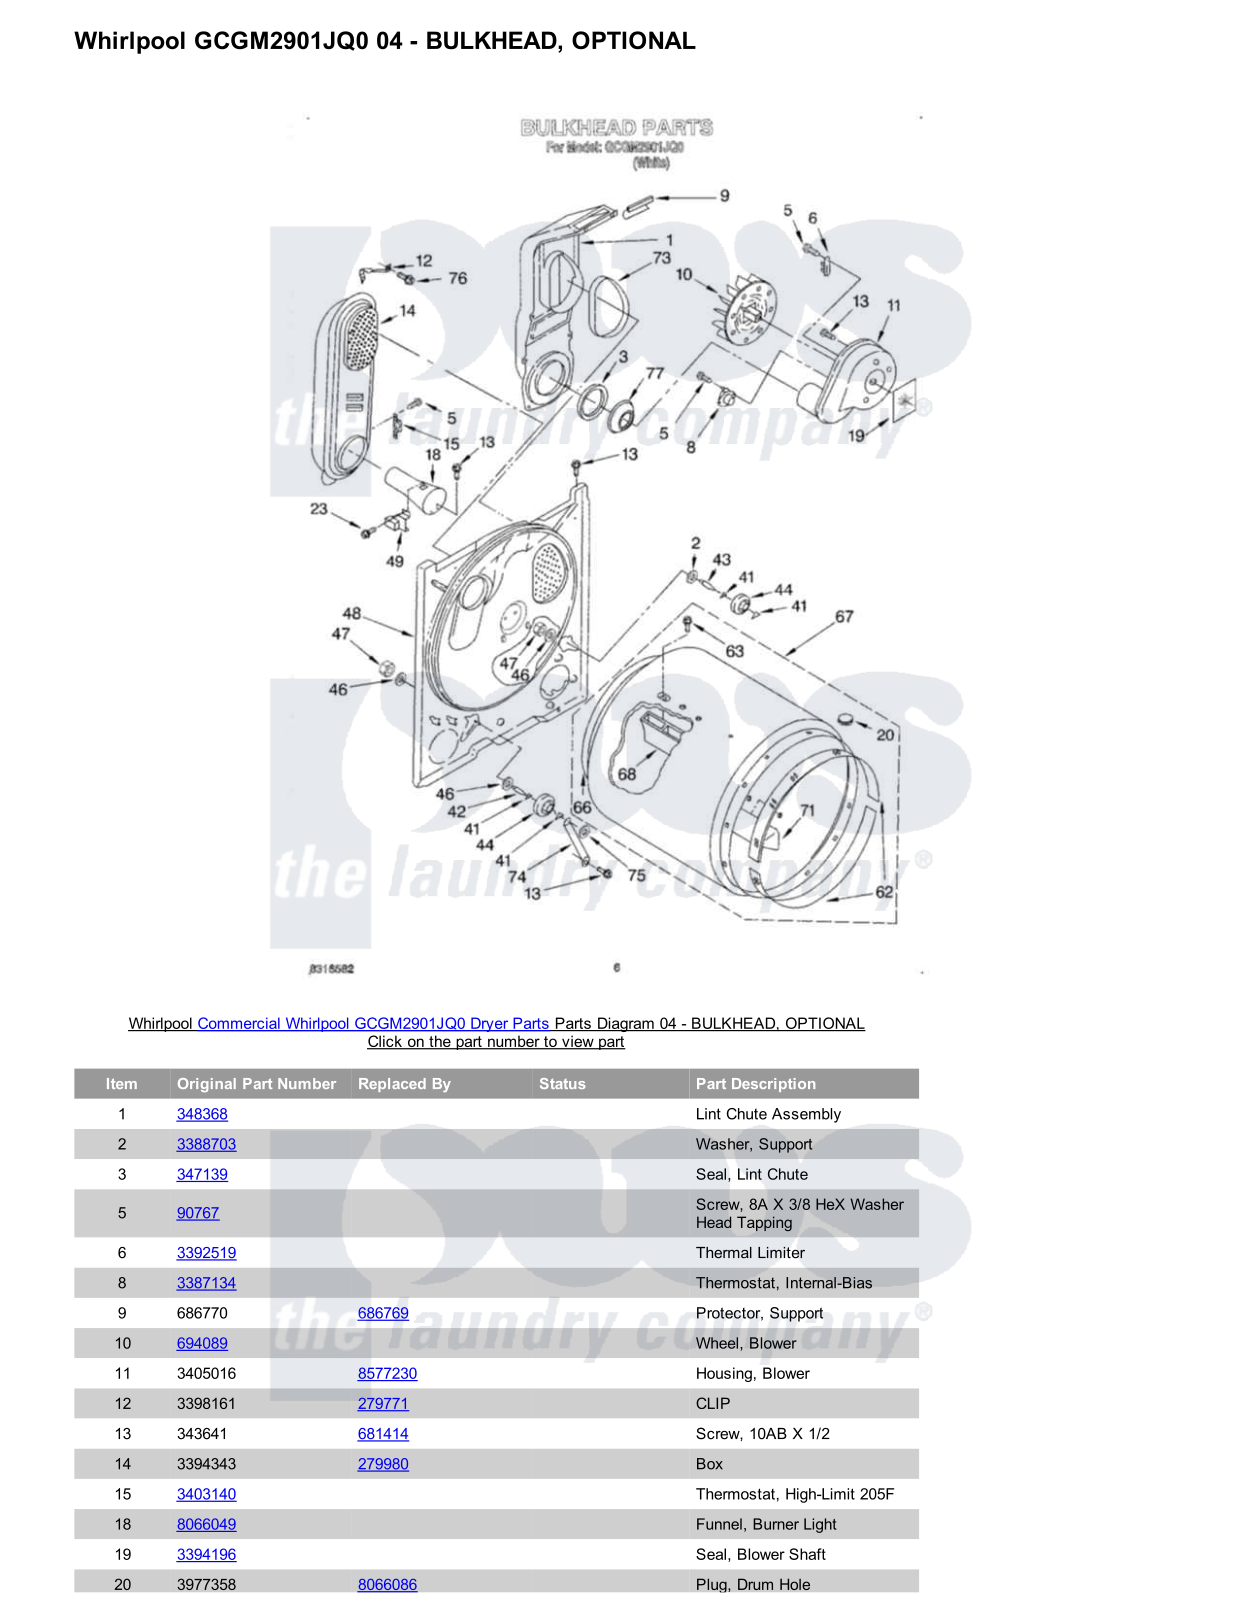 Whirlpool GCGM2901JQ0 Parts Diagram